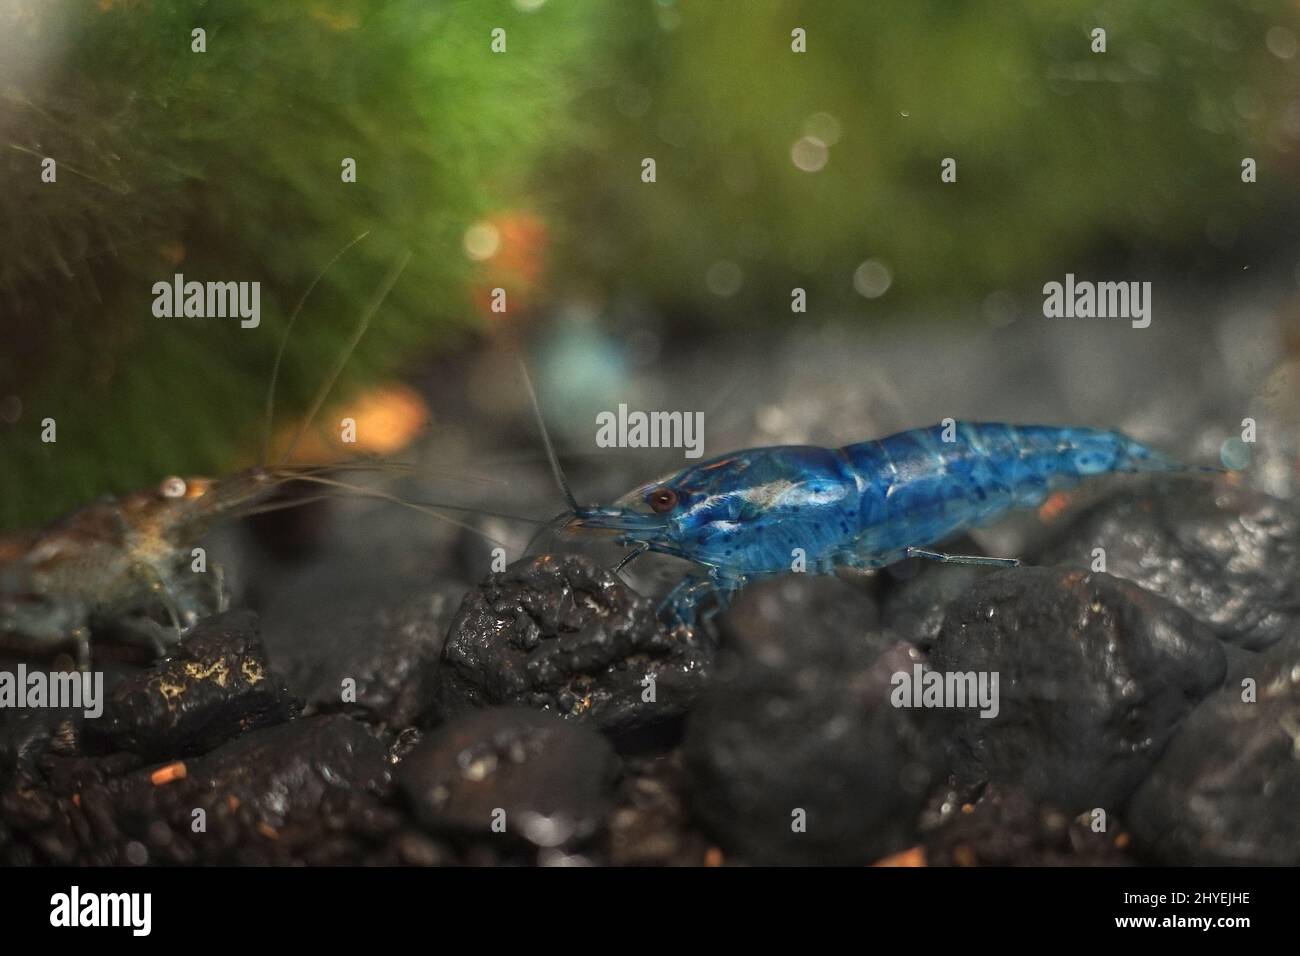 Closeup of exotic blue Neocaridina Shrimp on a stone Stock Photo